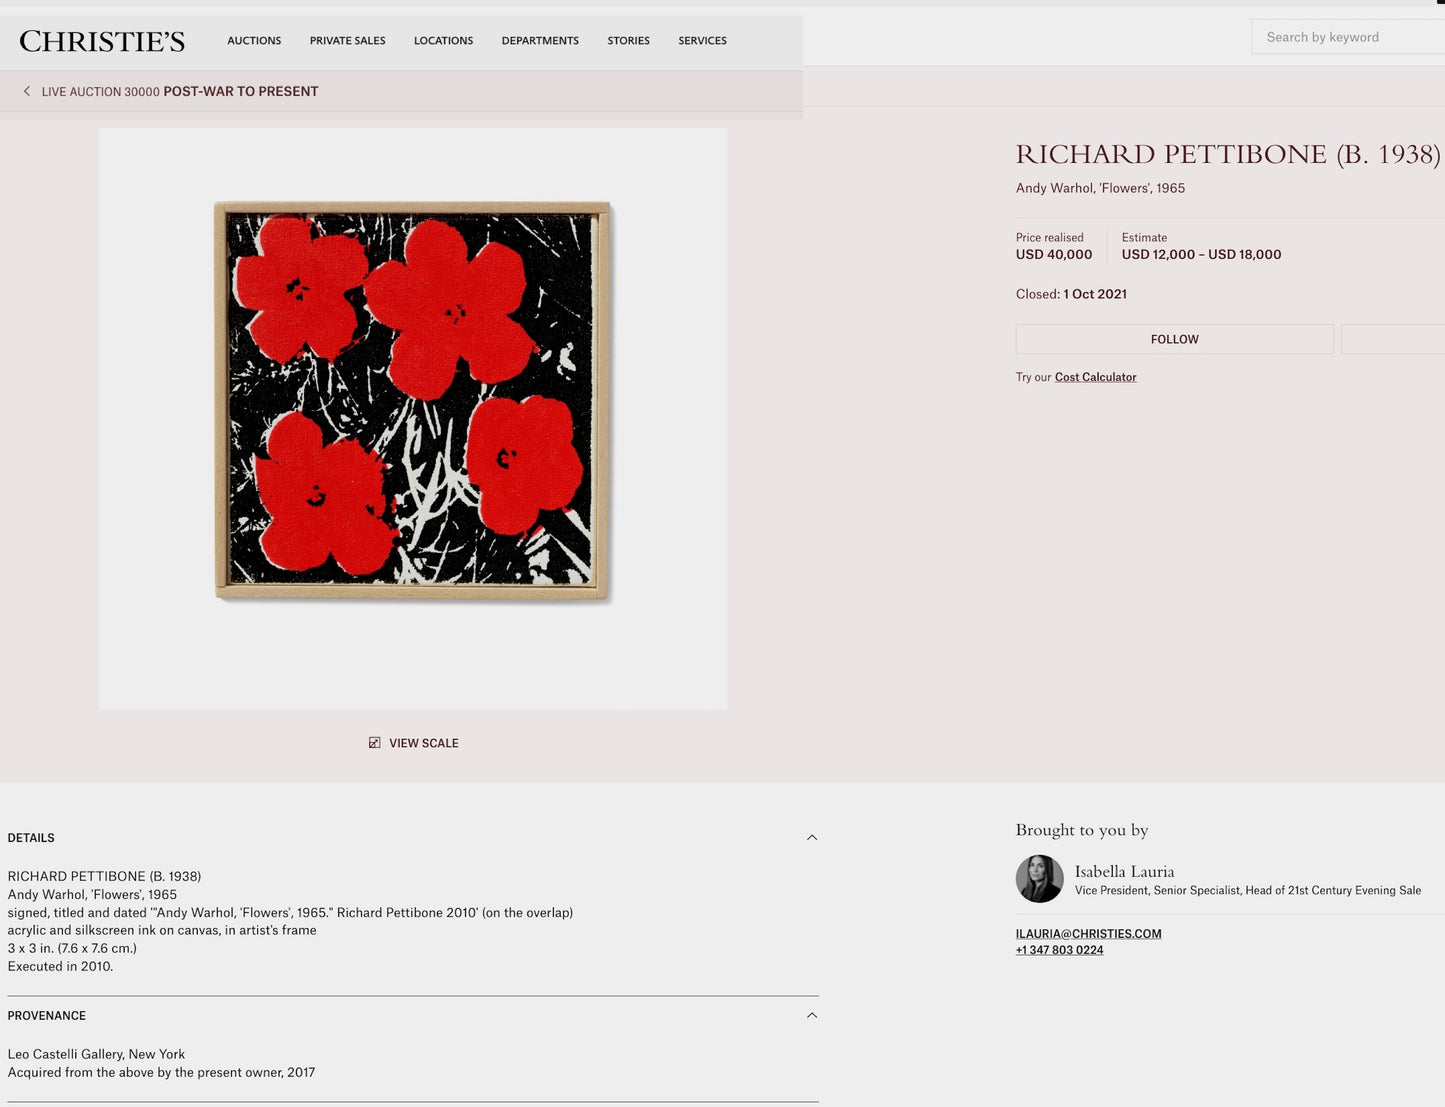 Richard Pettibone Flowers sold for $40,000